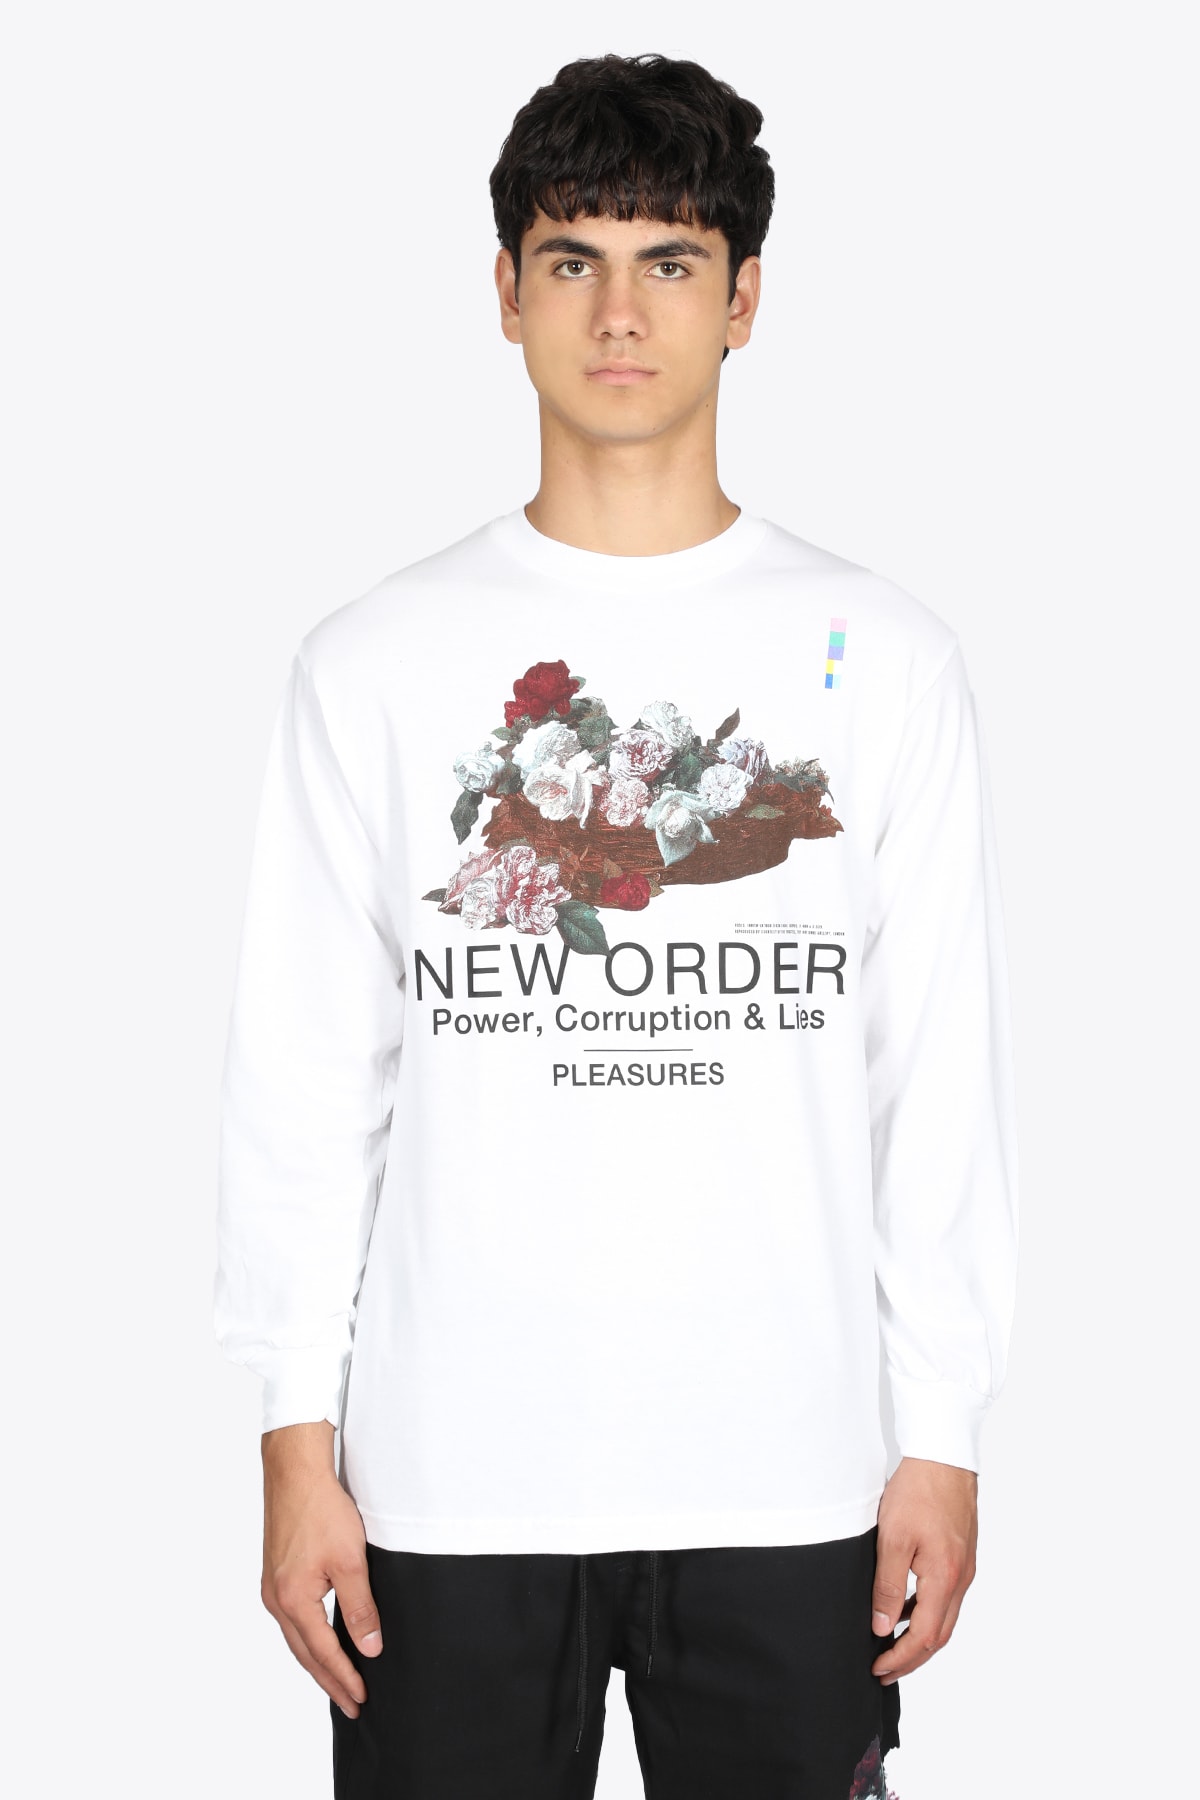 Pleasures Power Long Sleevet-shirt White cotton long sleeves t-shirt with album cover flowers print